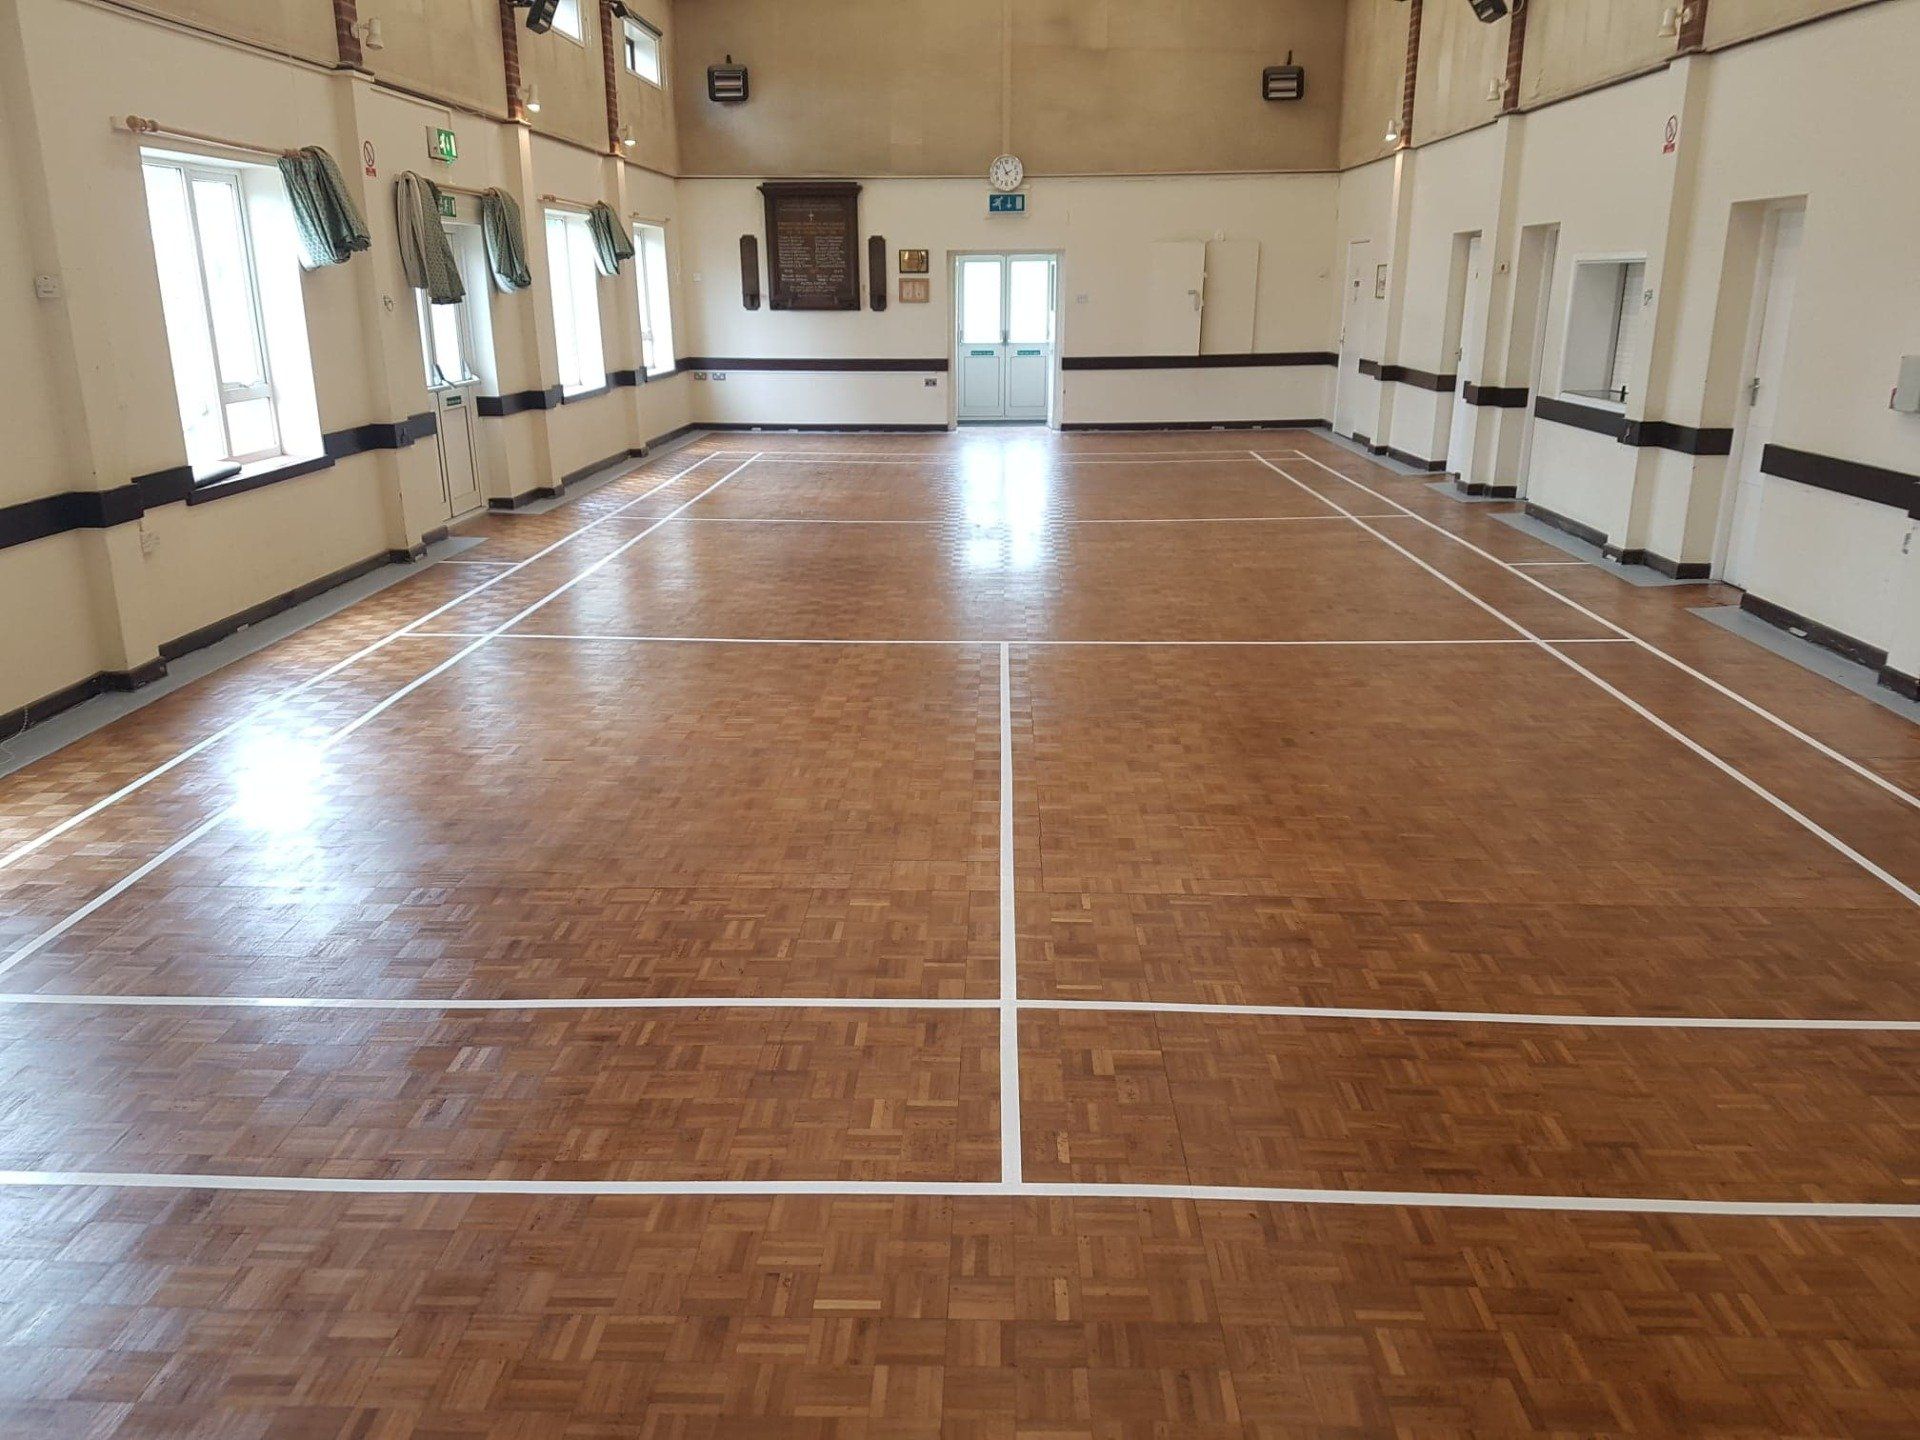 Restored wooden floor in large hall